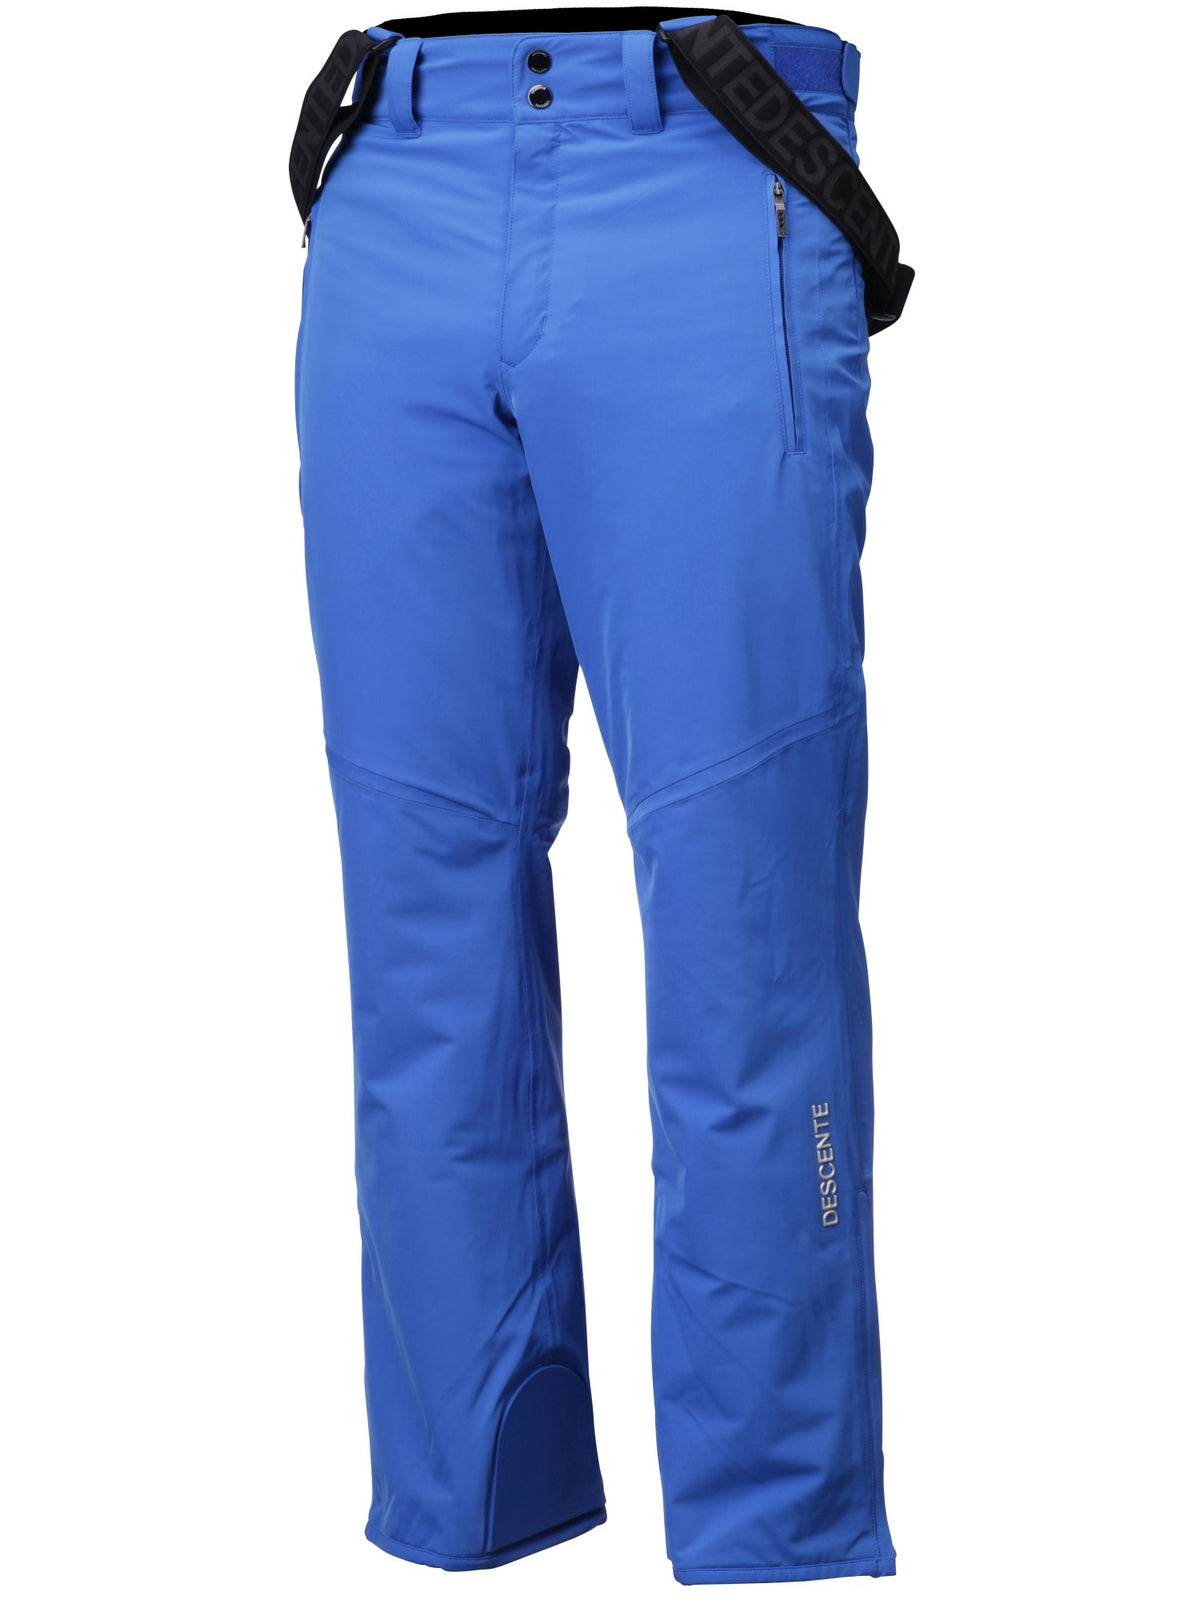 Descente Swiss Insulated Ski Pant (Men's) 